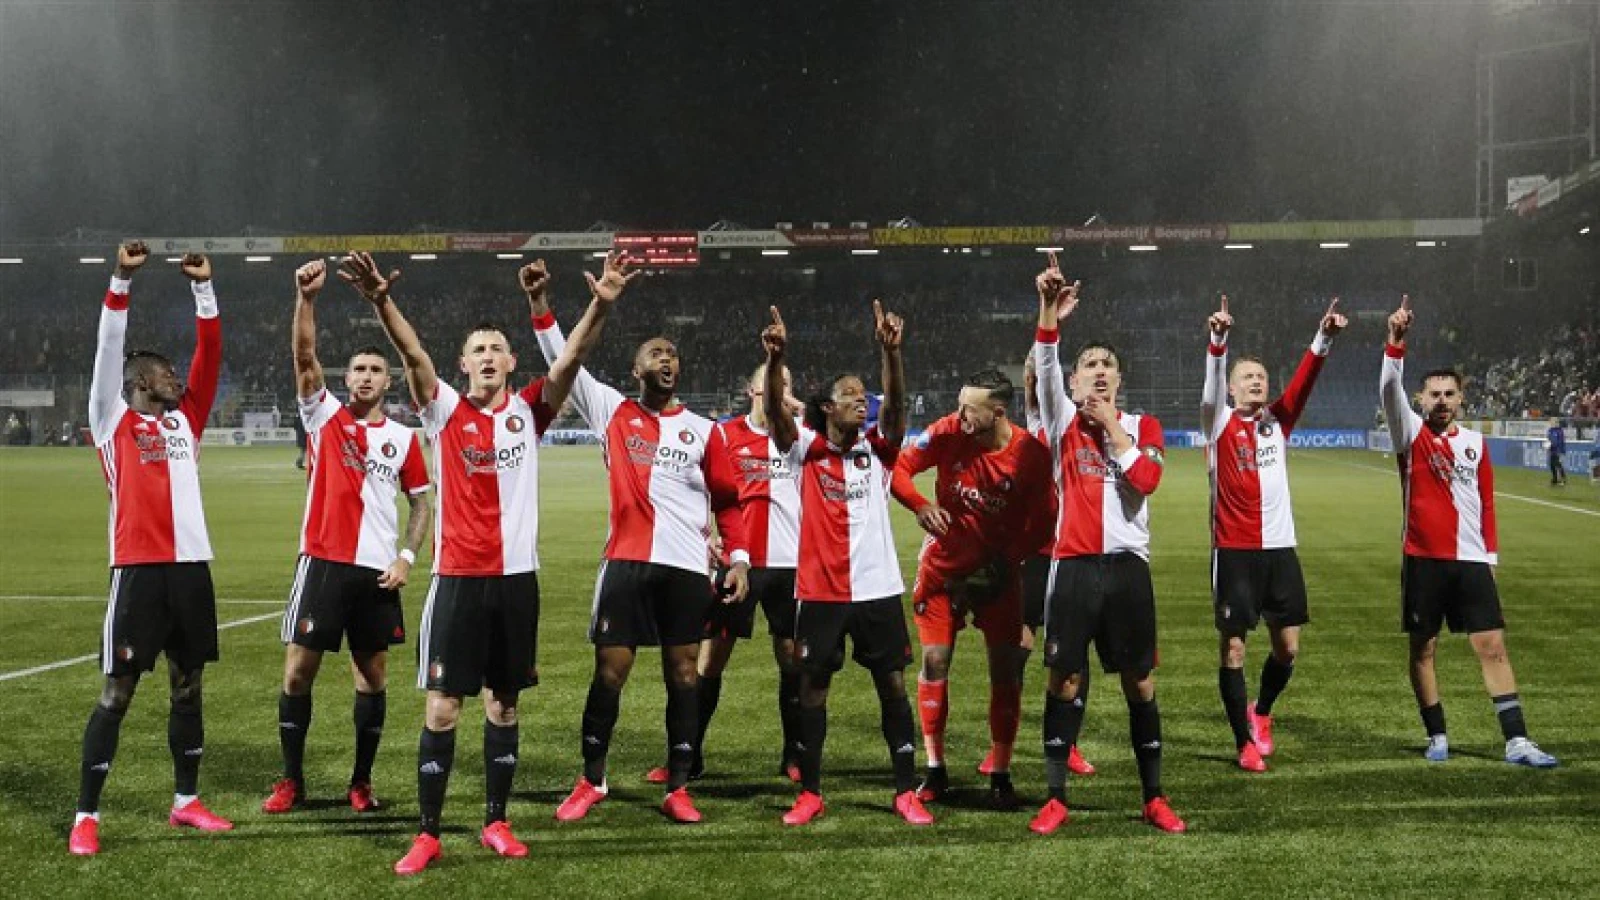 Vier spelers Feyenoord missen eventuele finale bij gele kaart